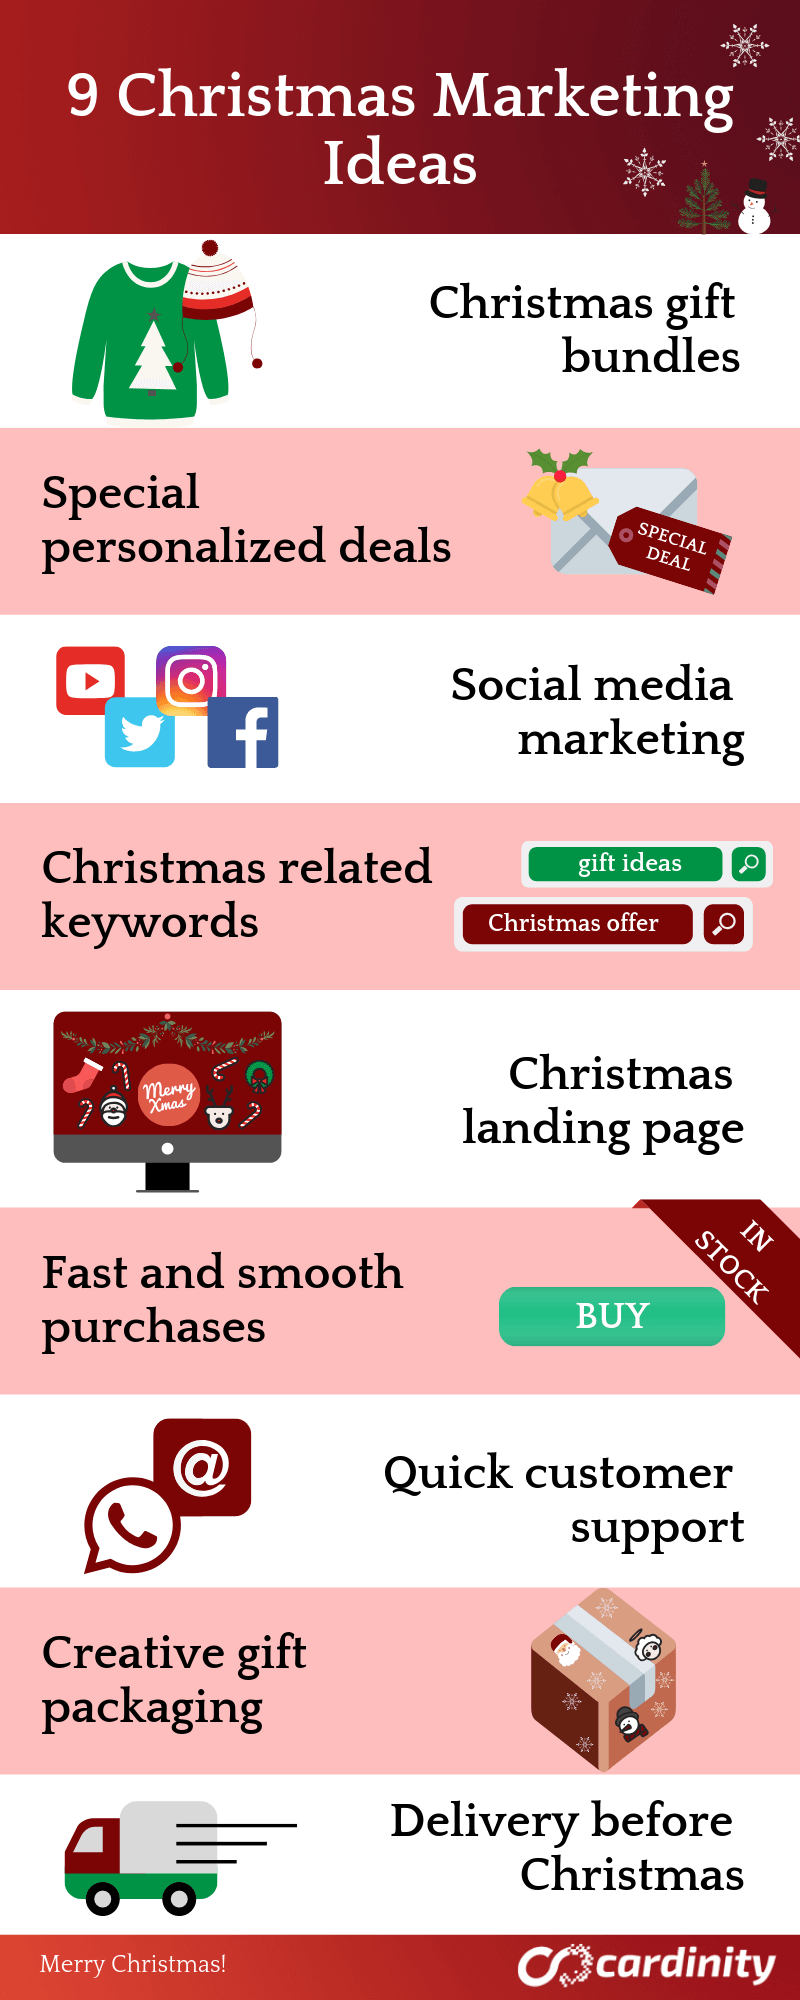 Christmas marketing ideas, infographic